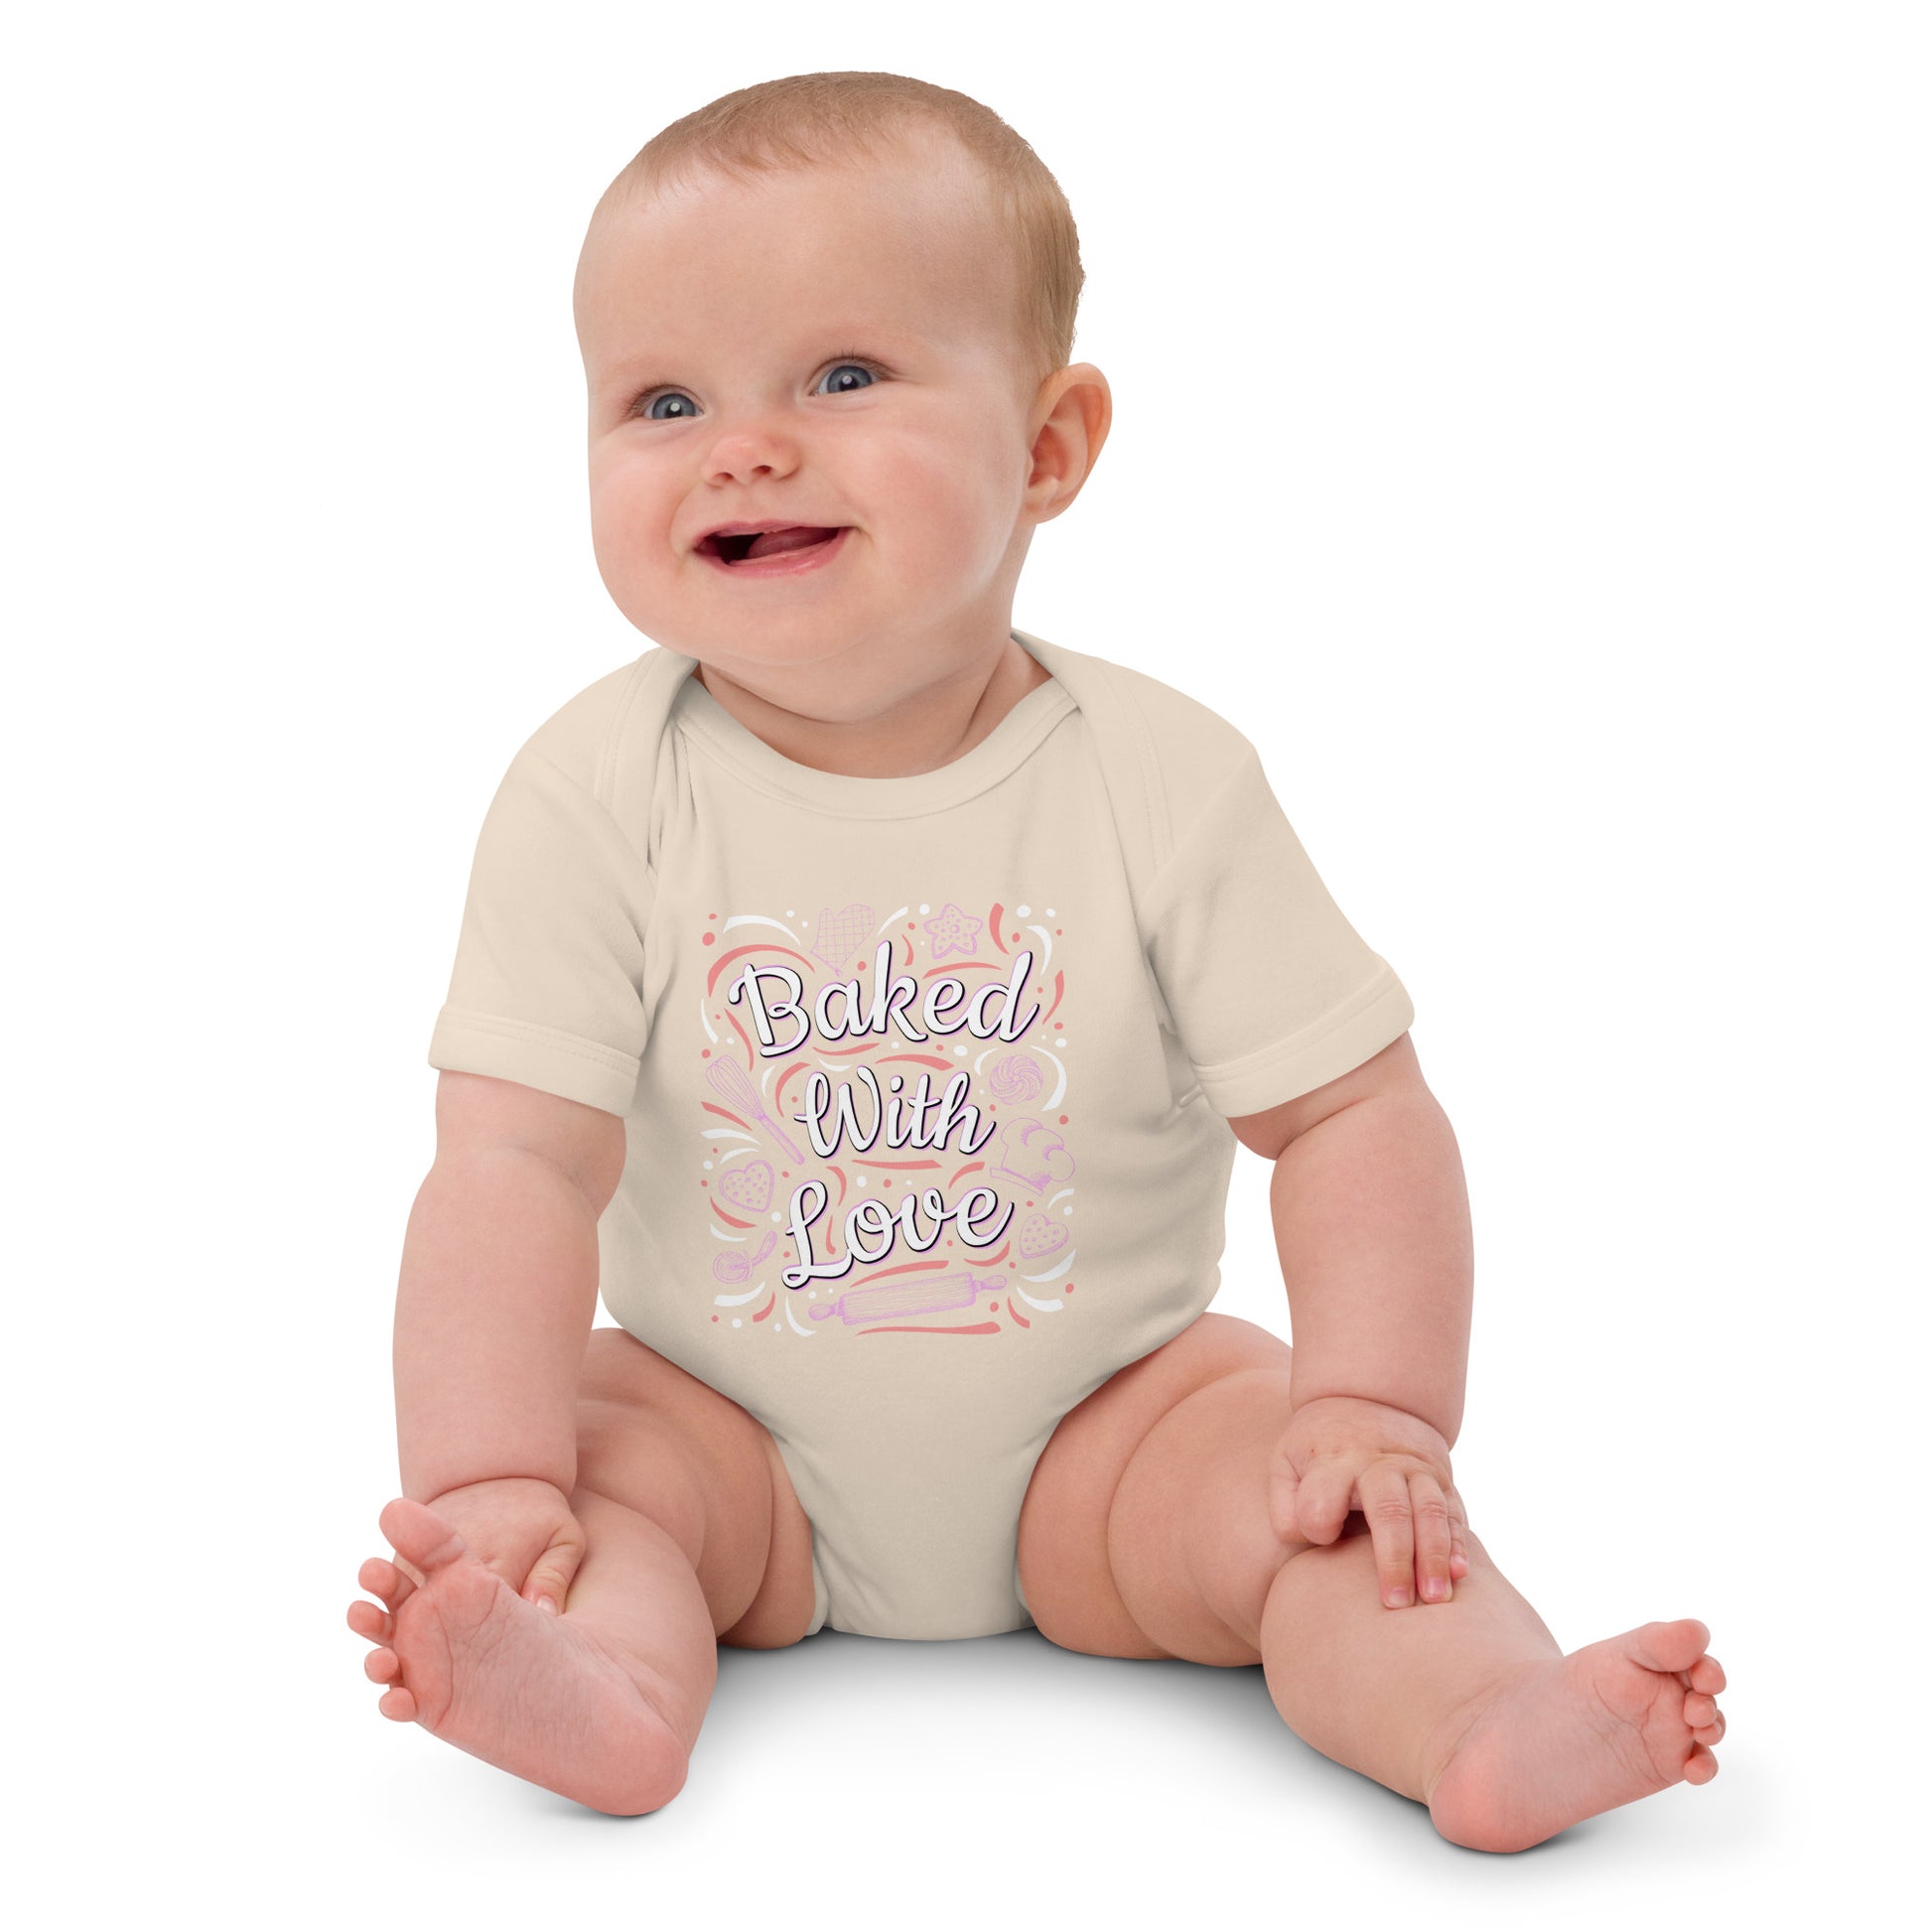 Baked with love - Organic cotton baby bodysuit - HobbyMeFree